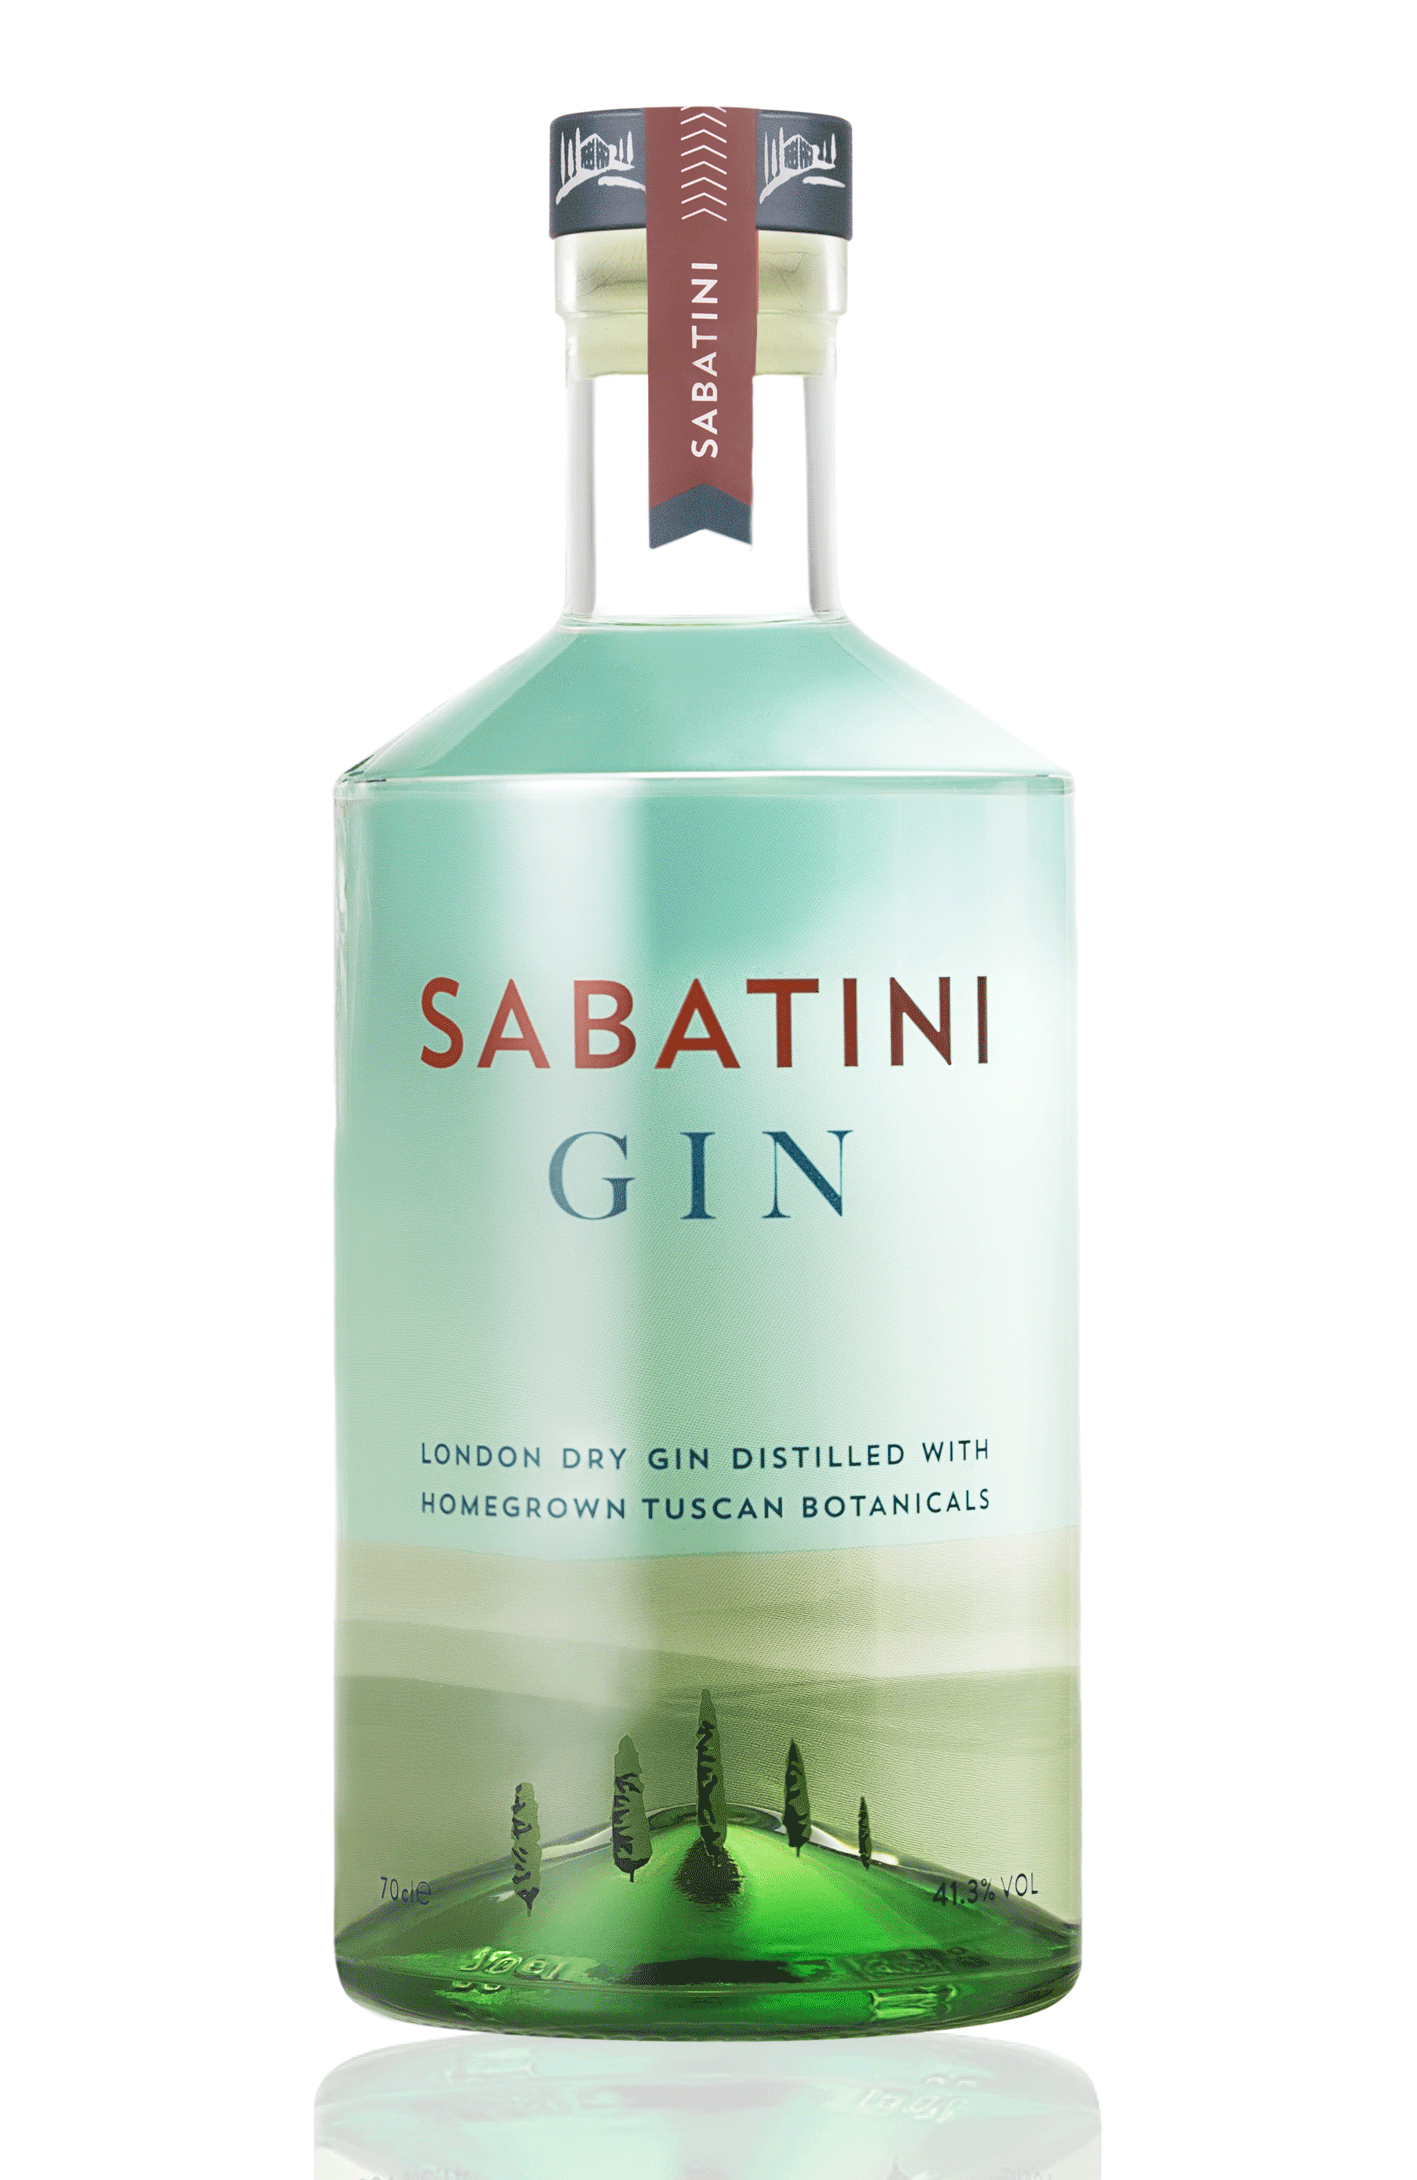 Sabatini London Dry Gin